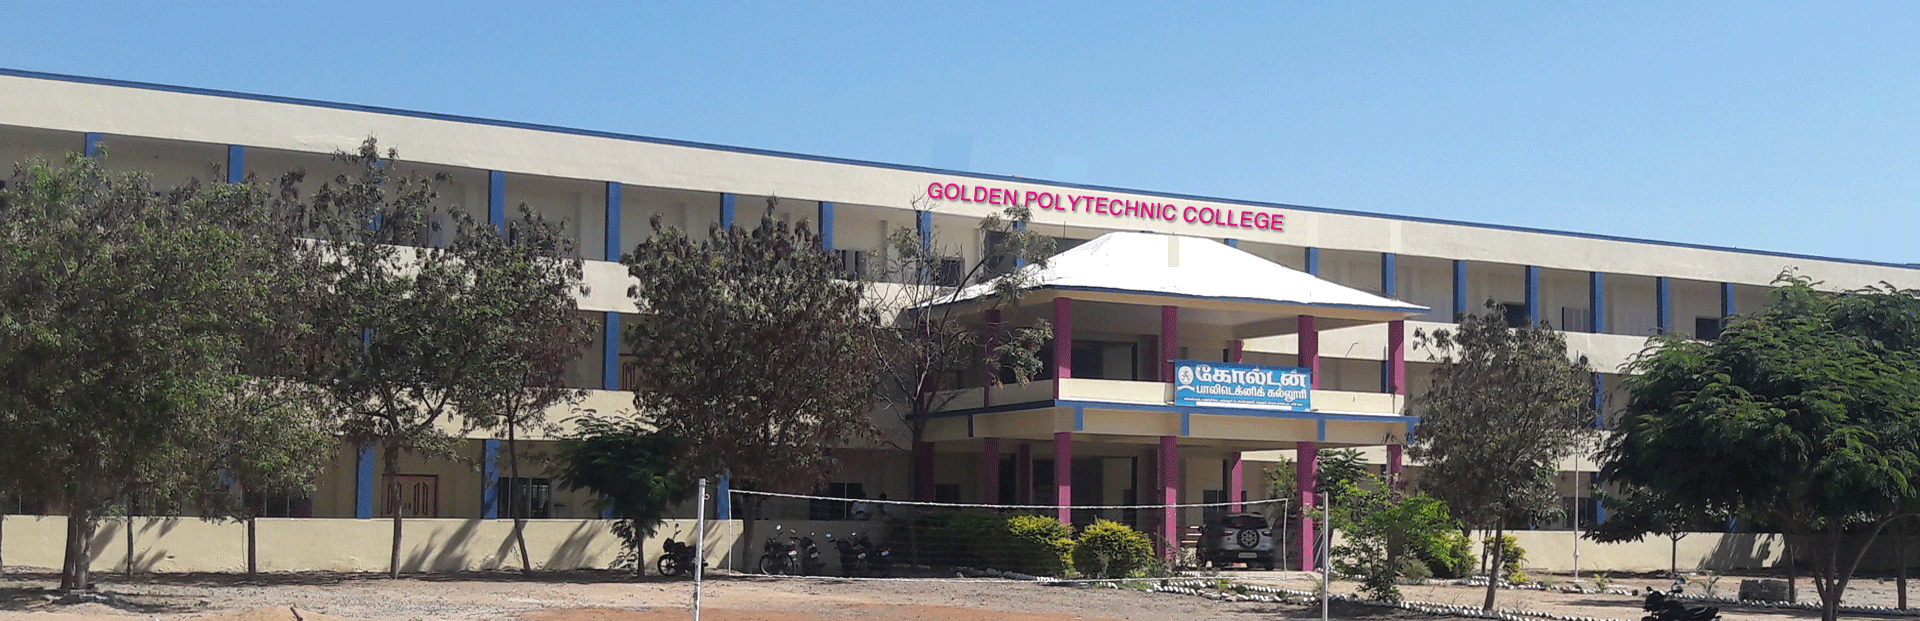 Golden Polytechnic College Image